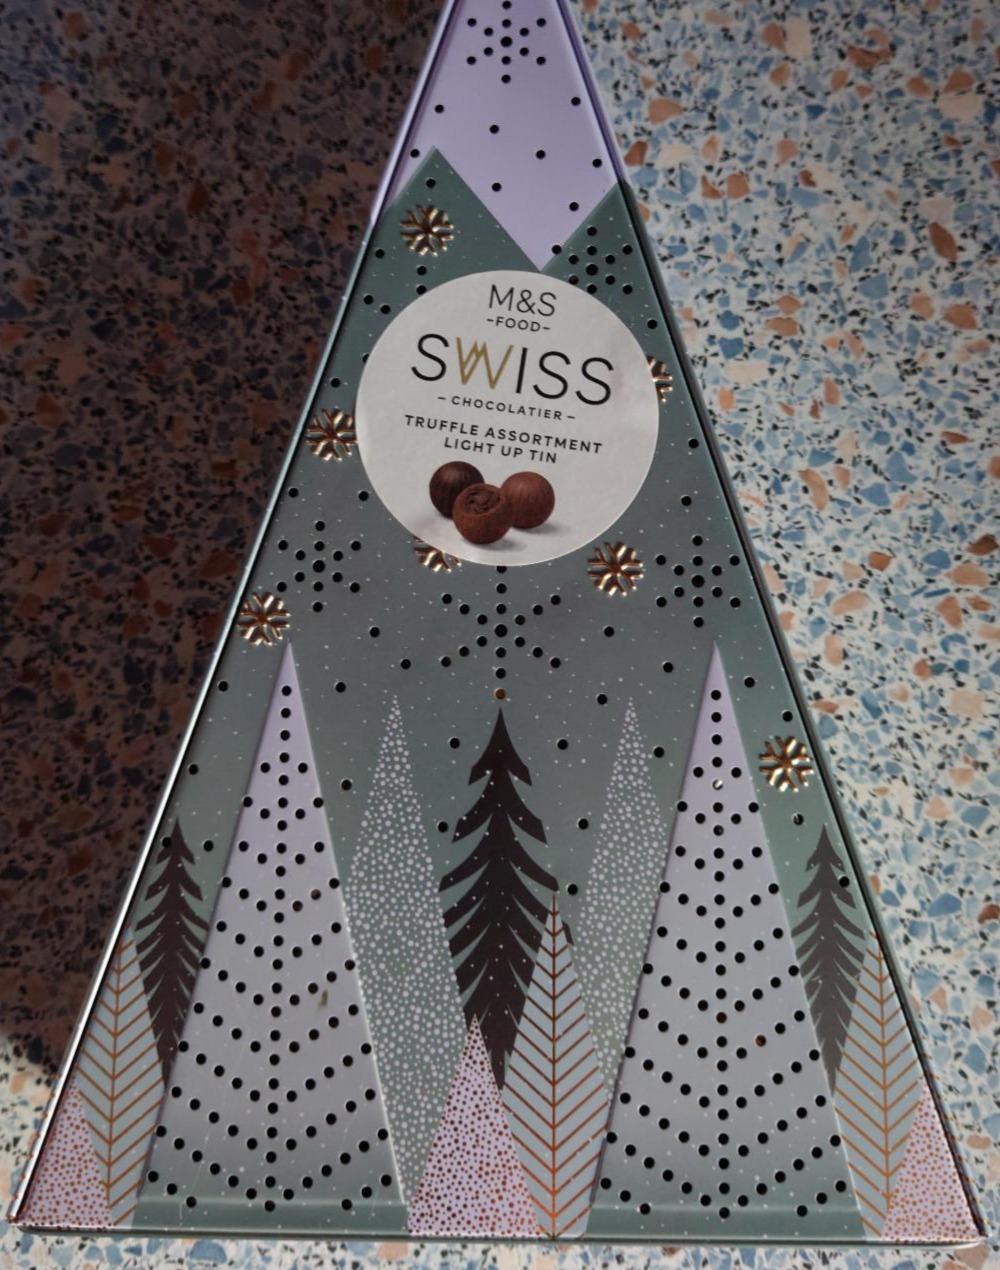 Fotografie - Swiss Chocolatier Truffle Assortment Light Up Tin M&S Food